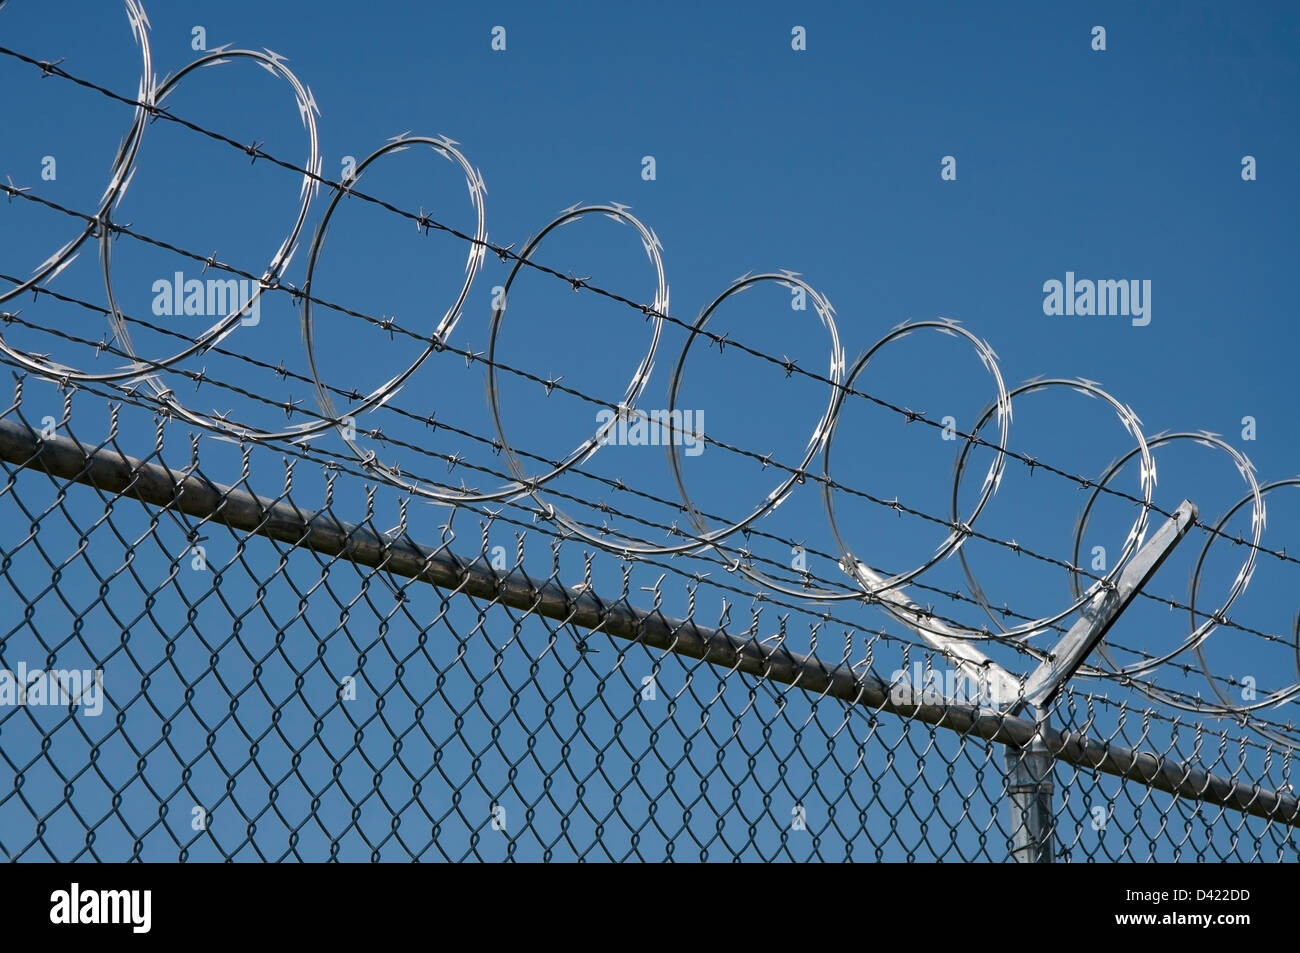 Fence with razor wire Stock Photo